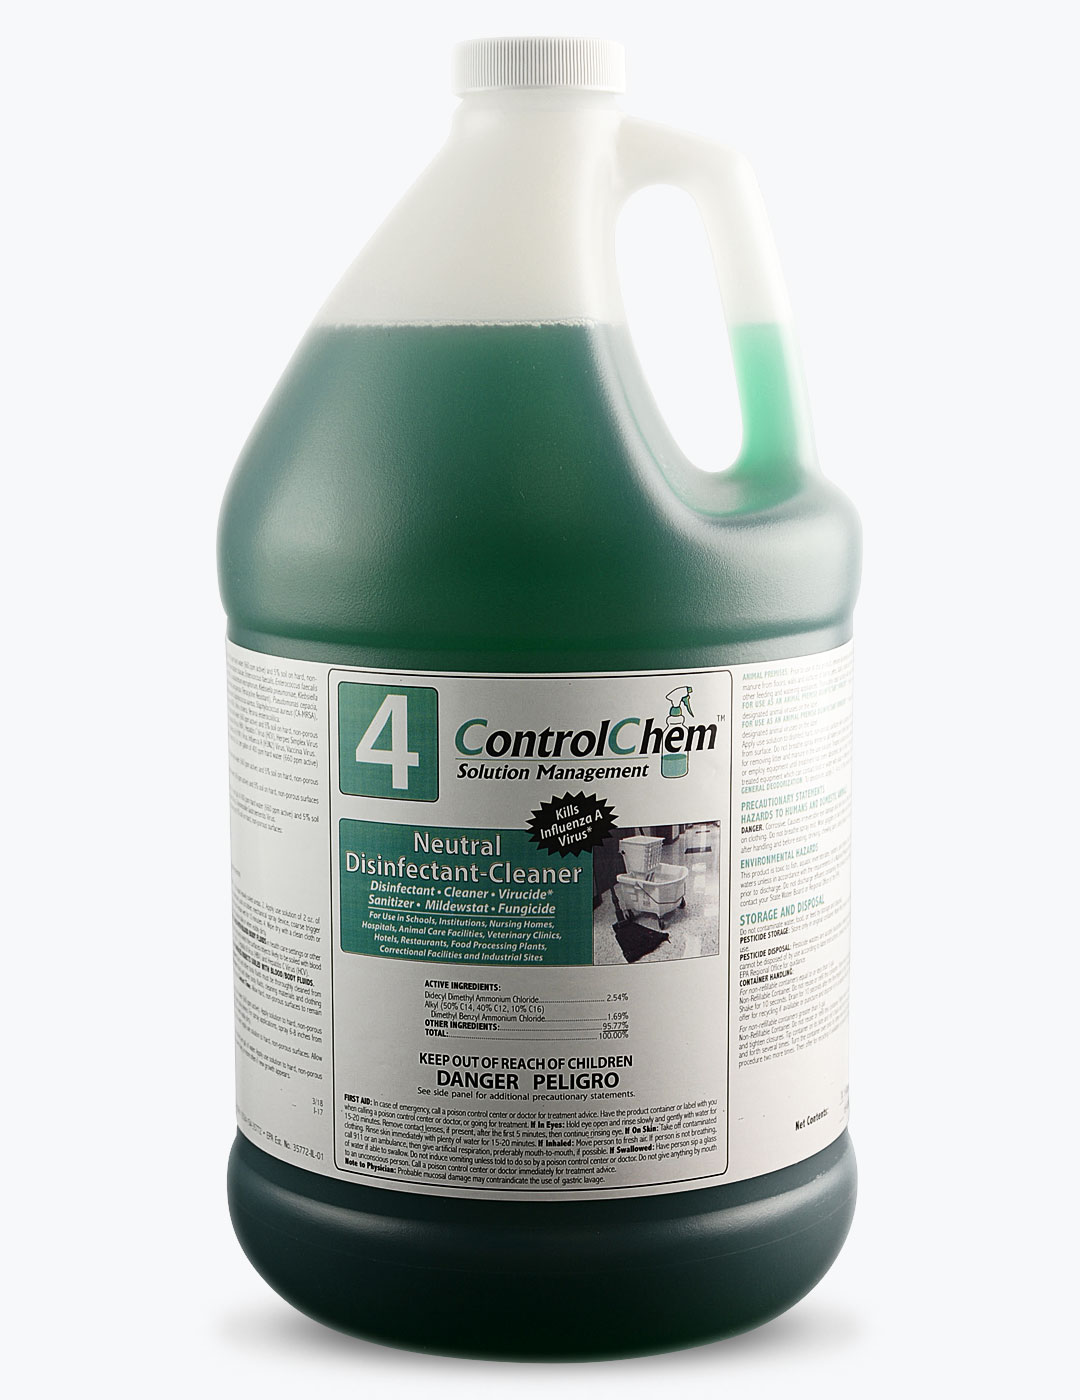 ControlChem #4 Neutral Disinfectant-Cleaner